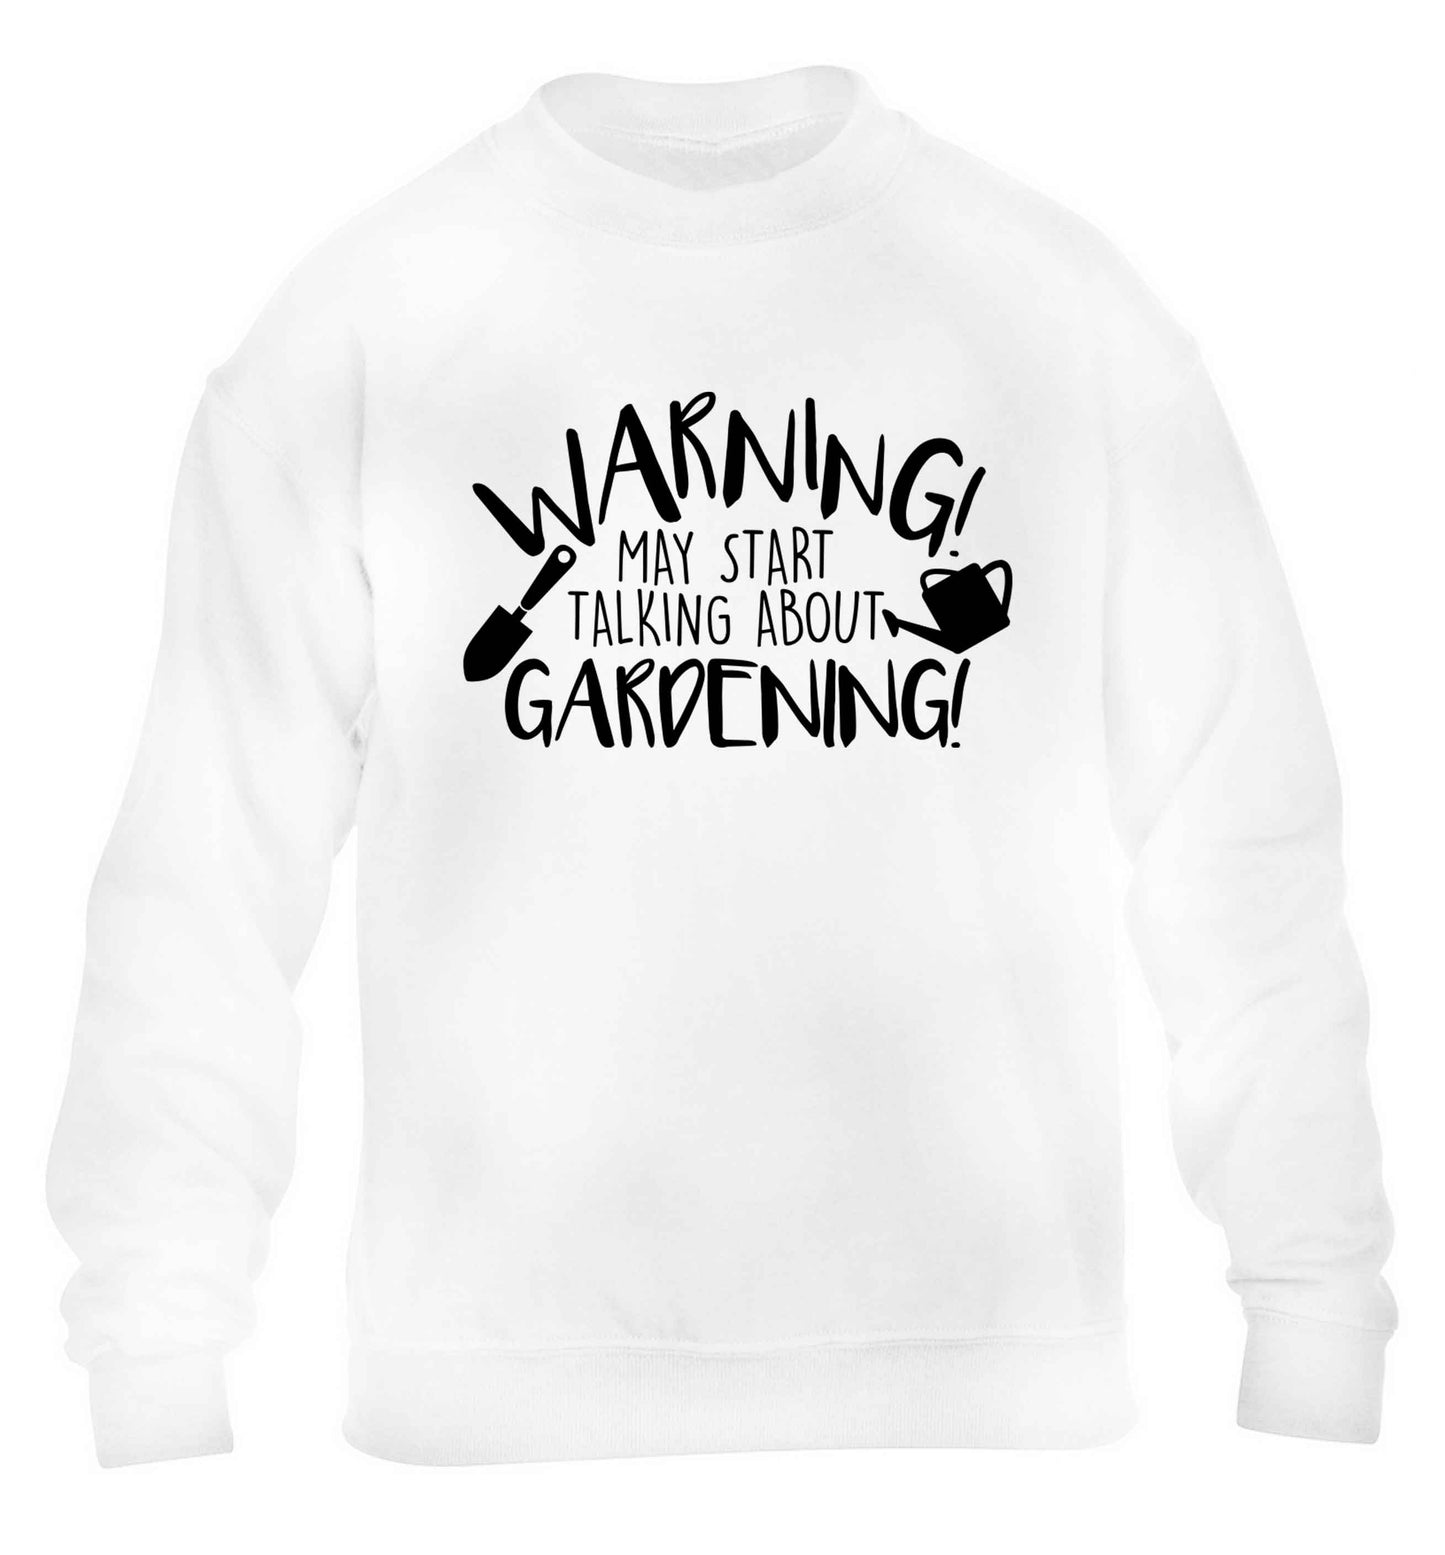 Warning may start talking about gardening children's white sweater 12-13 Years